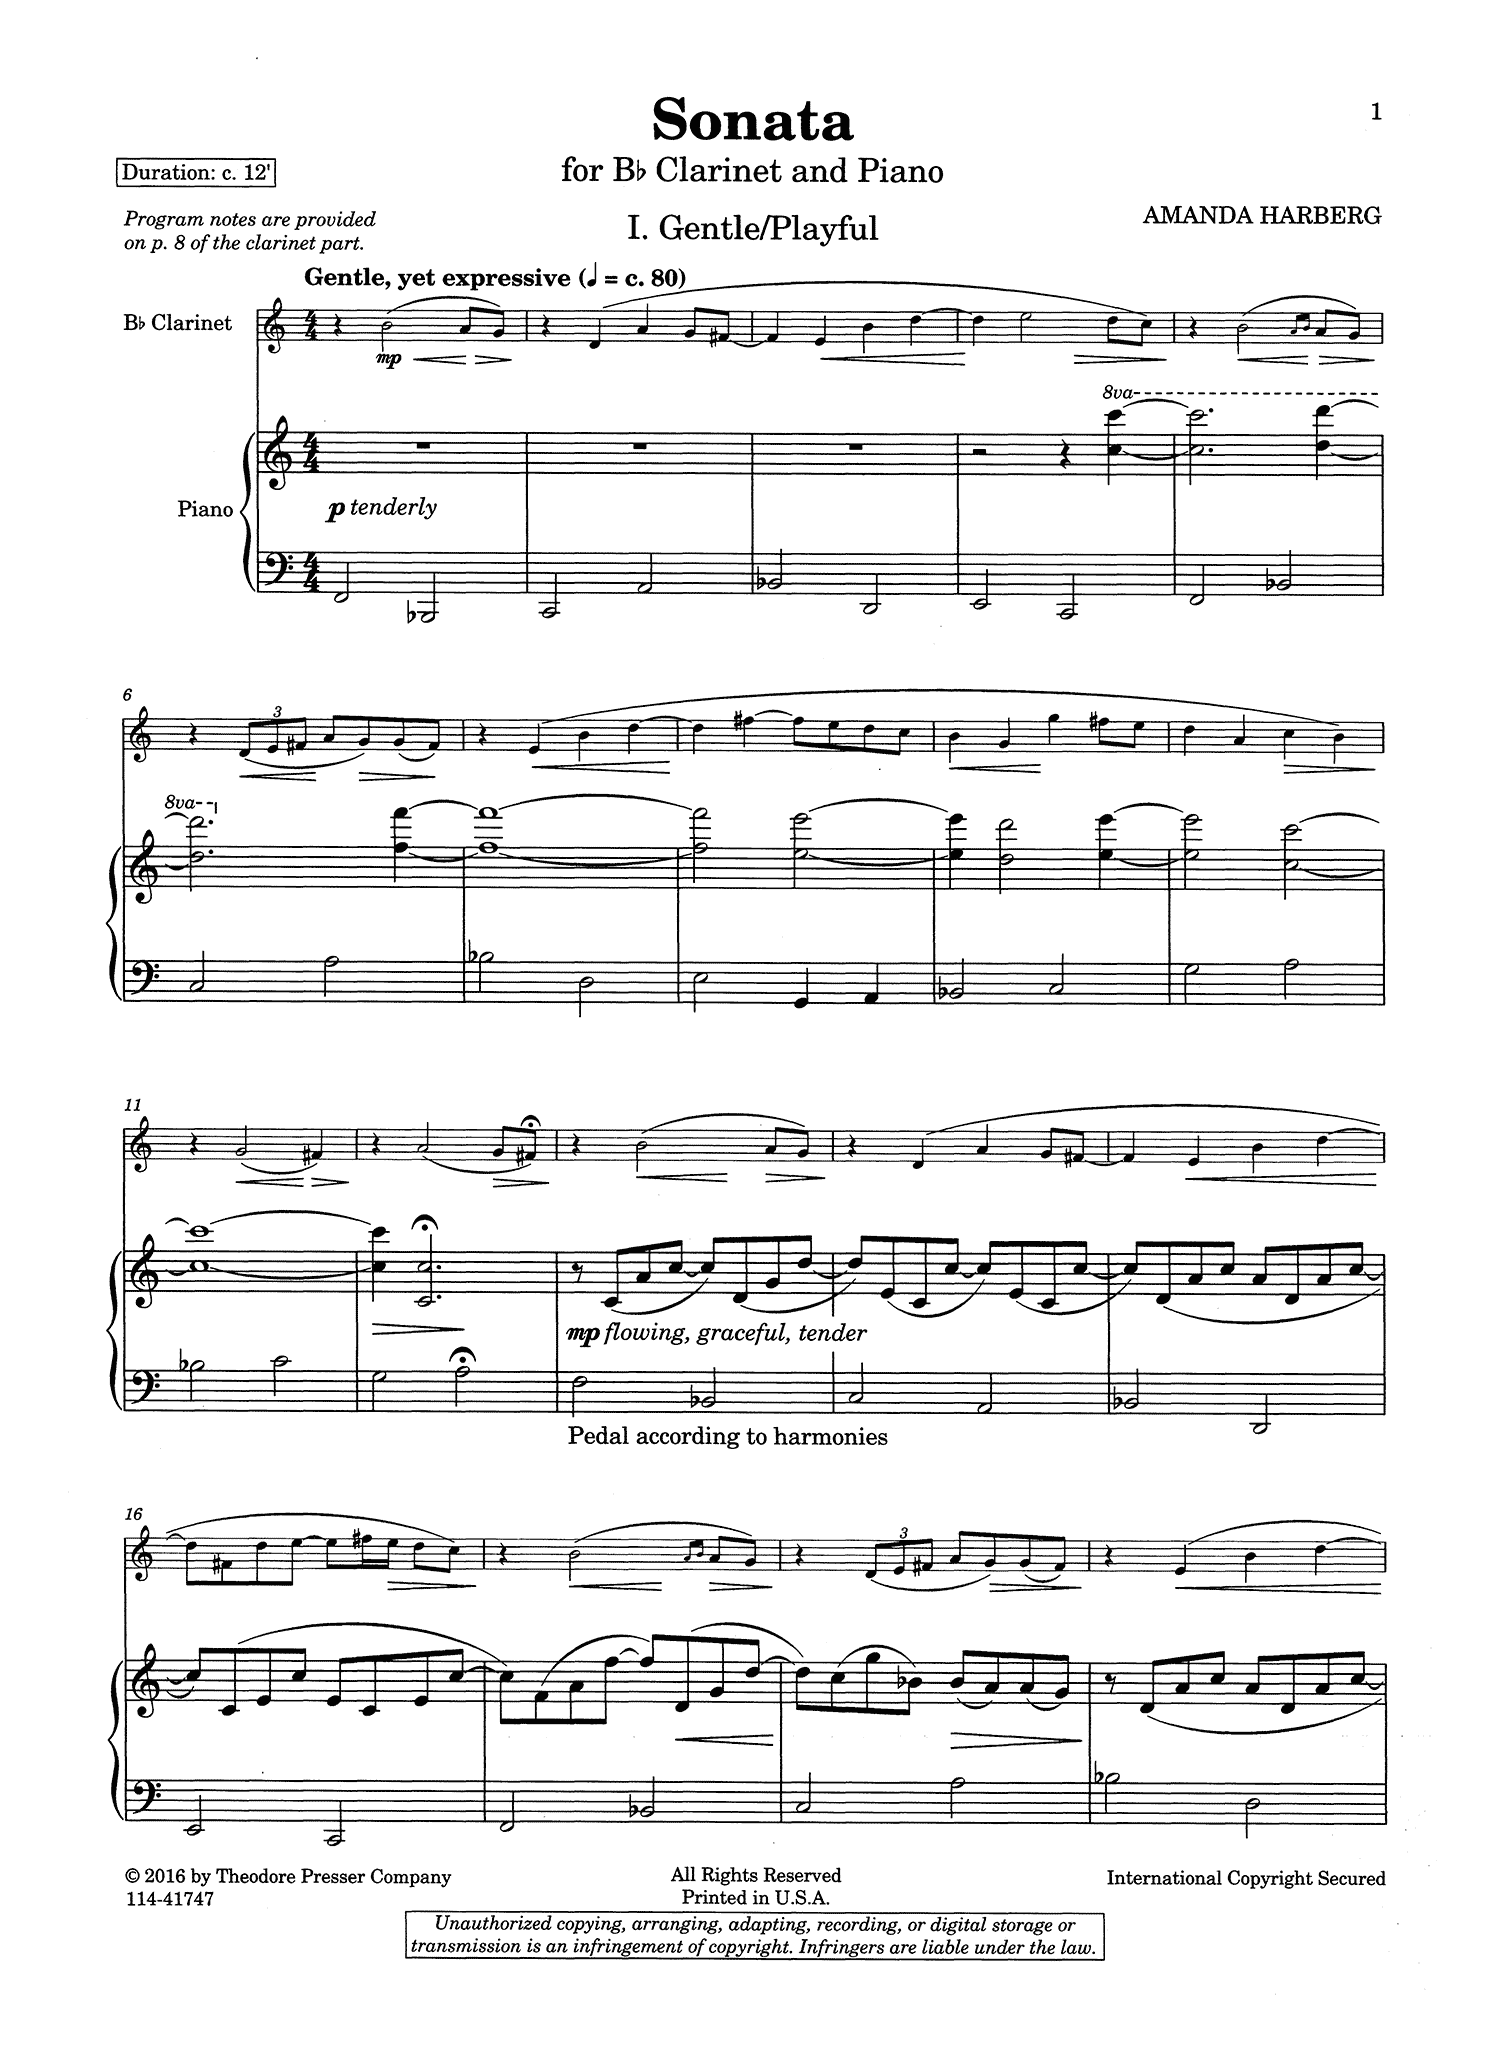 Harberg Clarinet Sonata - Movement 1